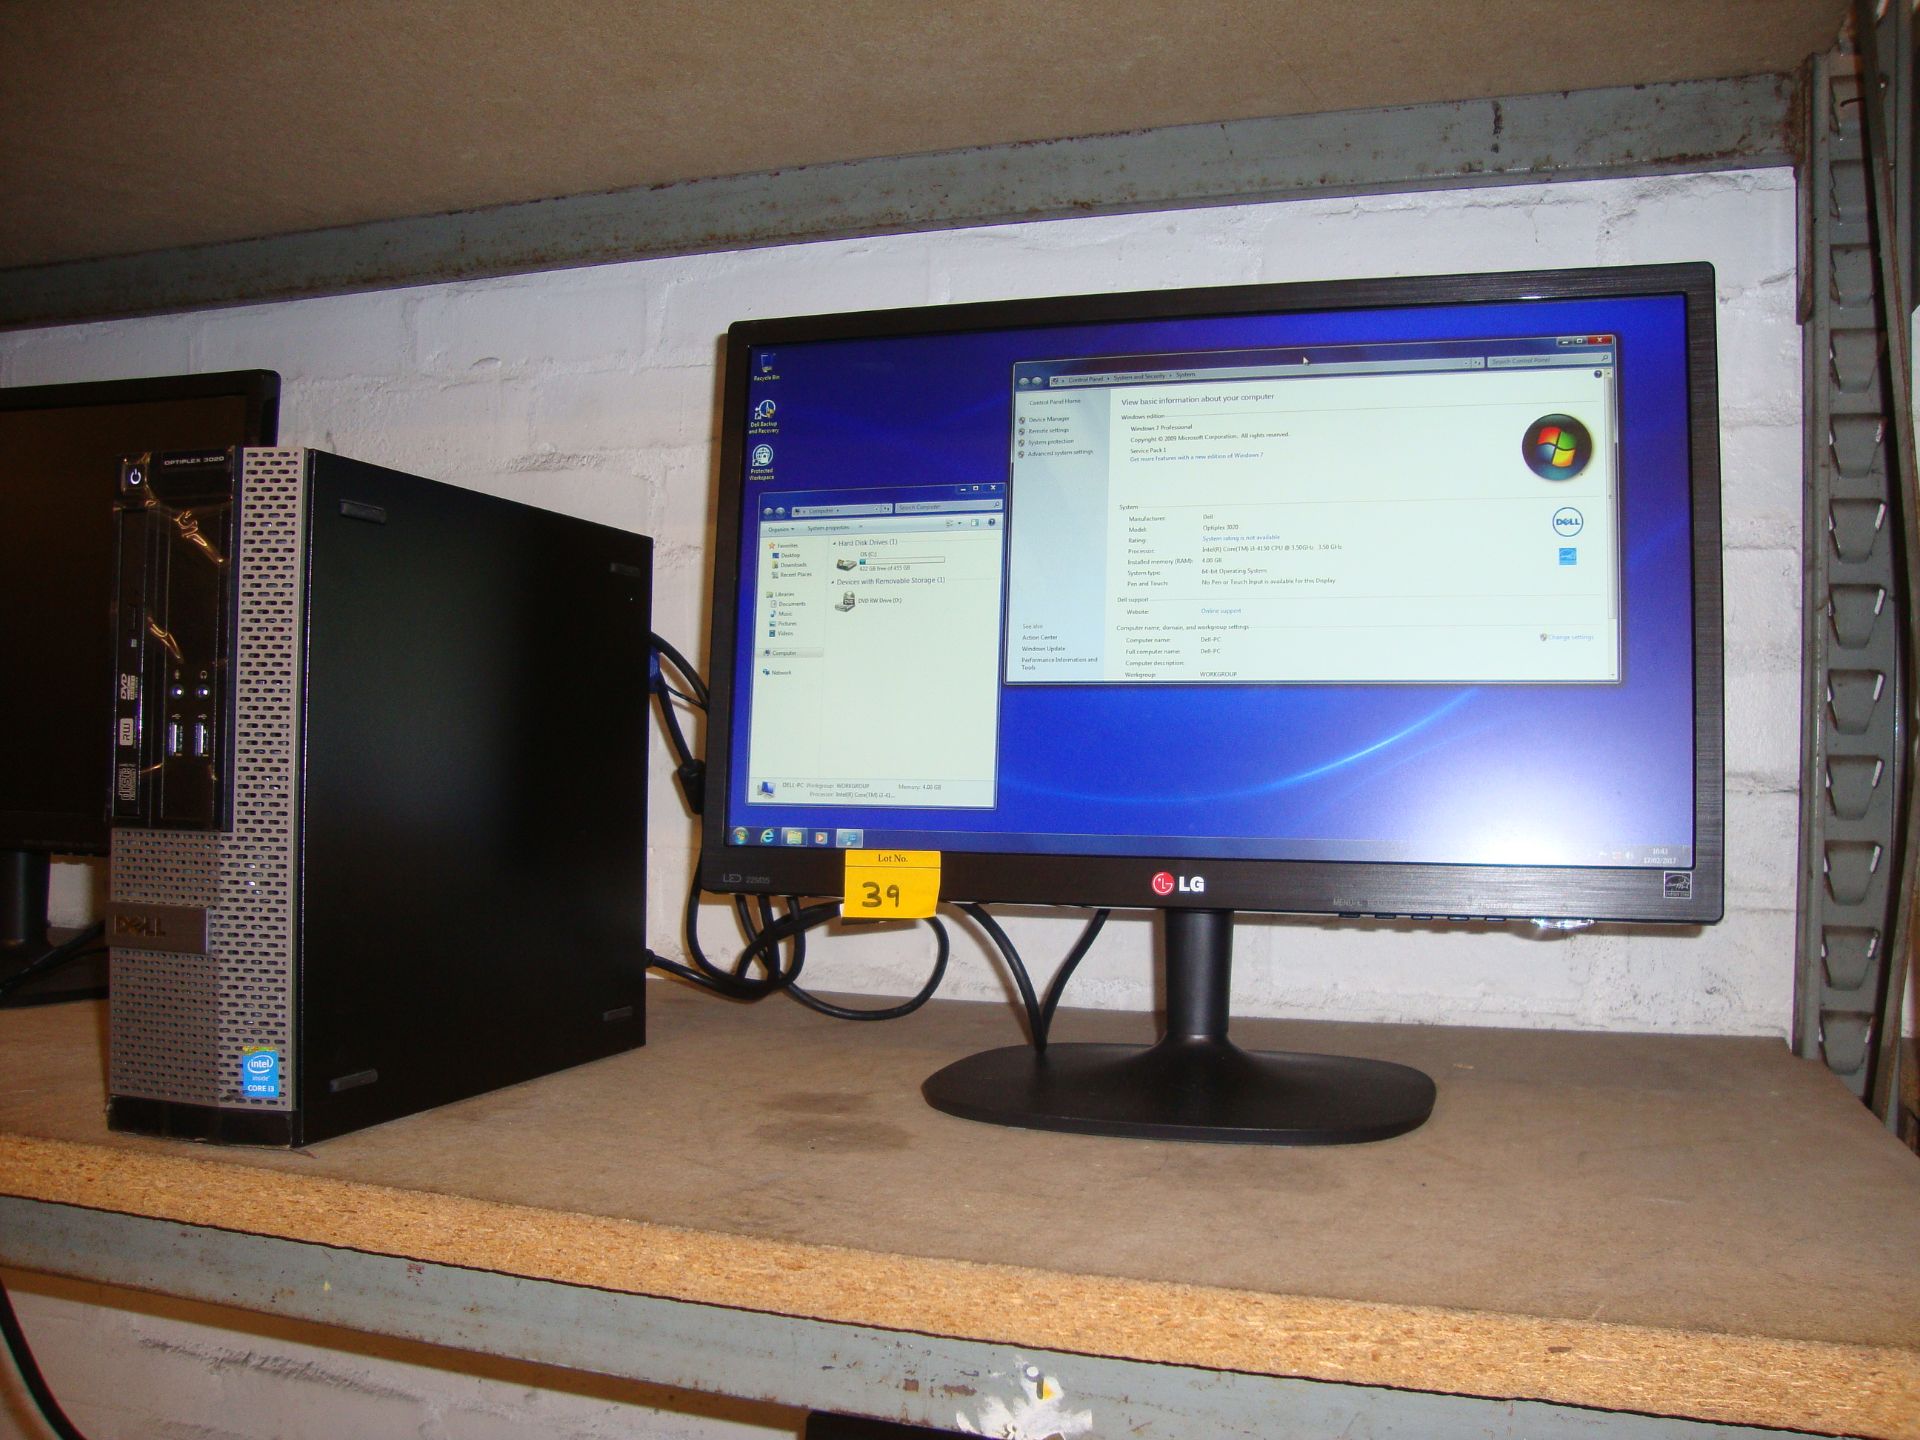 Dell Optiplex 3020 computer with Core i3-4150 processor, 4Gb RAM, 500Gb hard drive + LG 22" Monitor - Image 5 of 7